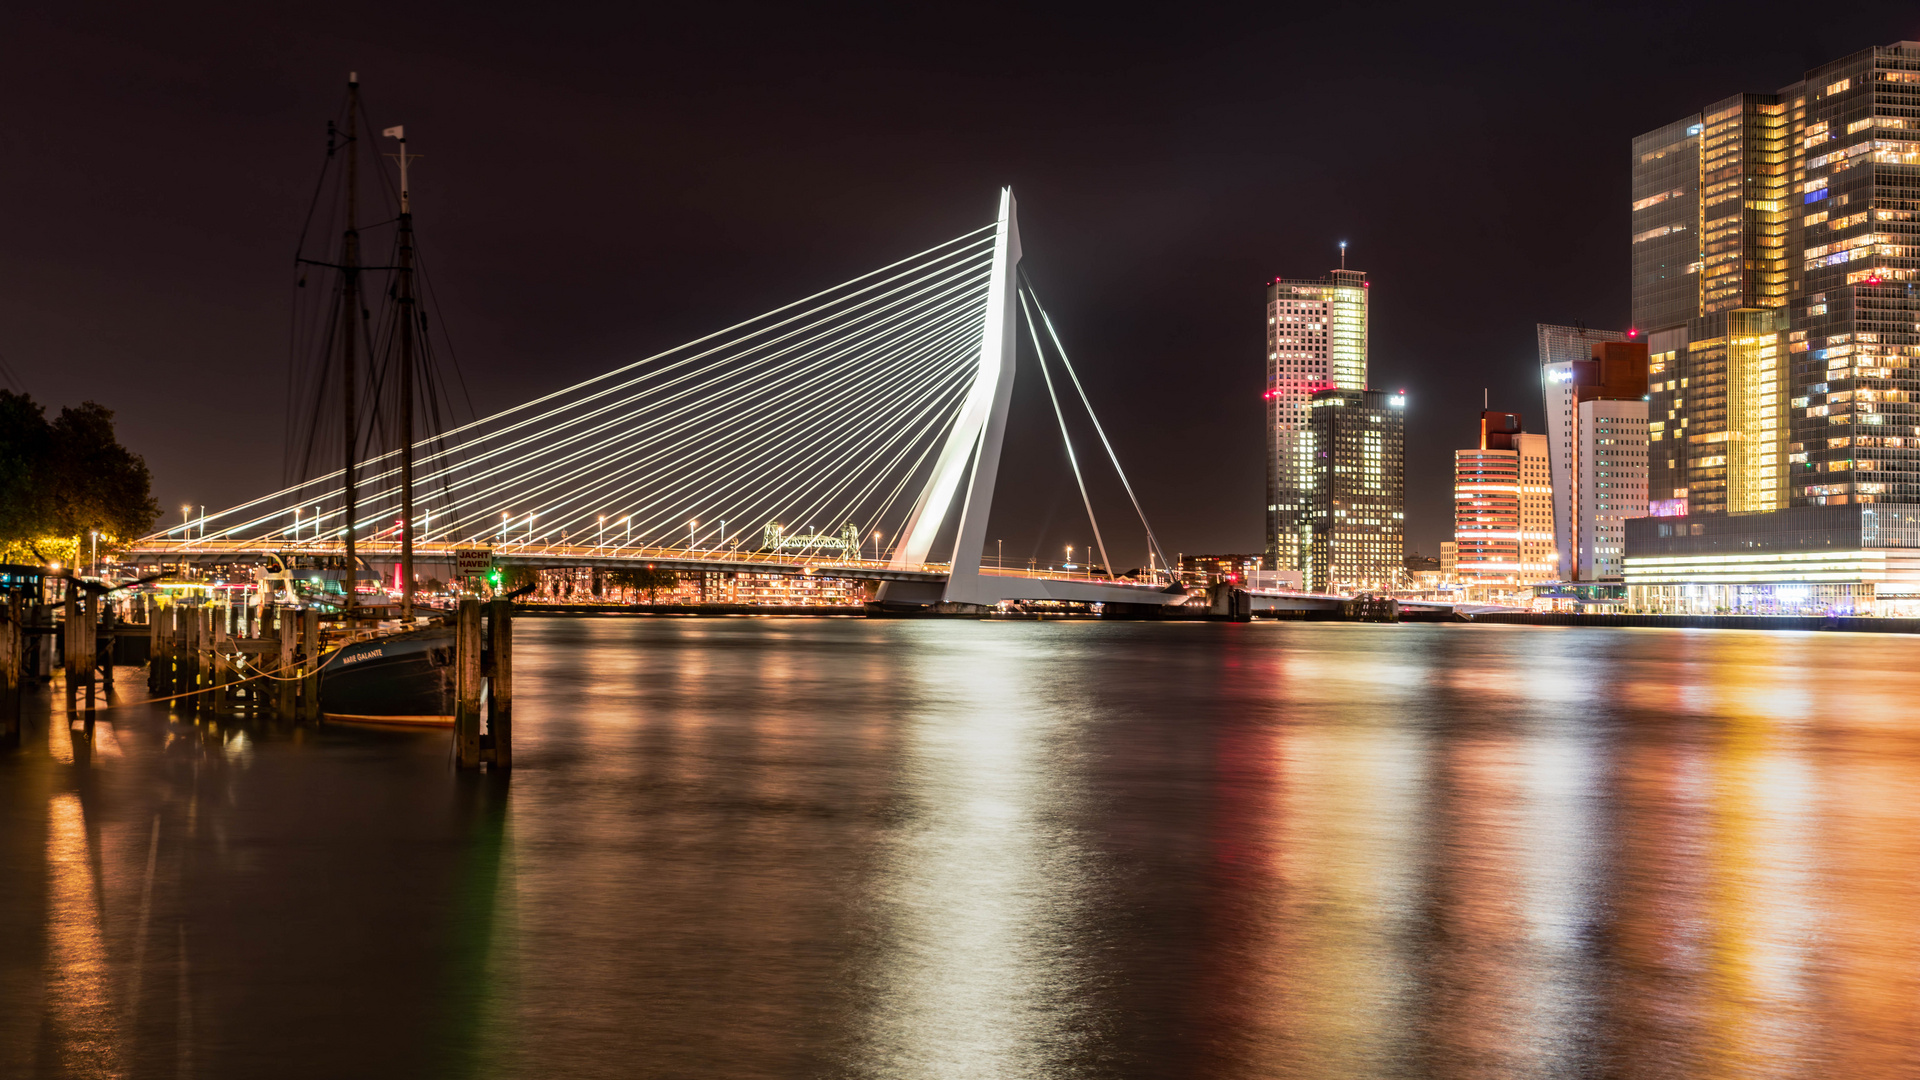 Rotterdam Erasmusbrücke